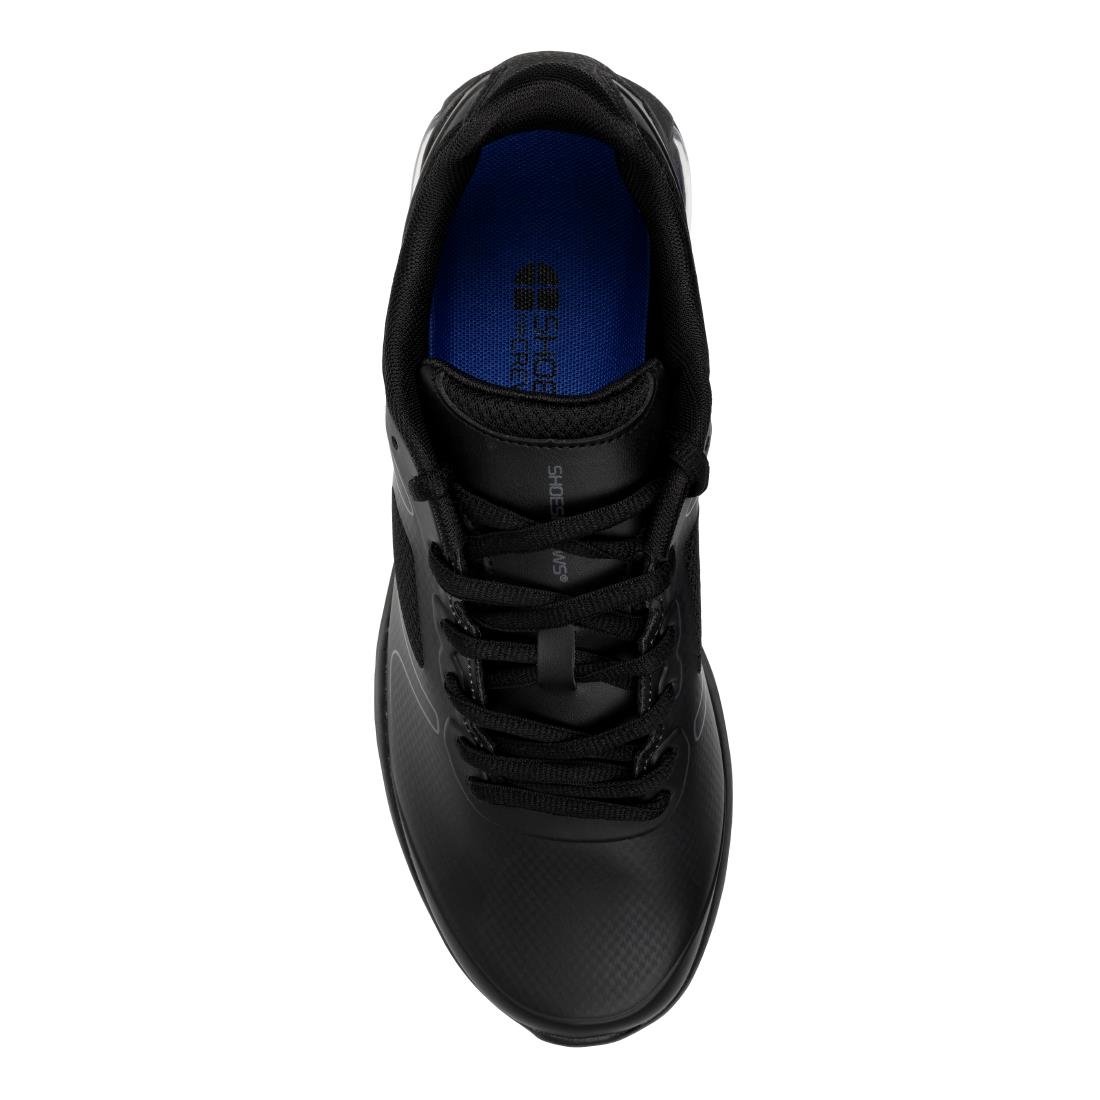 BB586-49 Shoes for Crews Men's Evolution Trainers Black Size 49